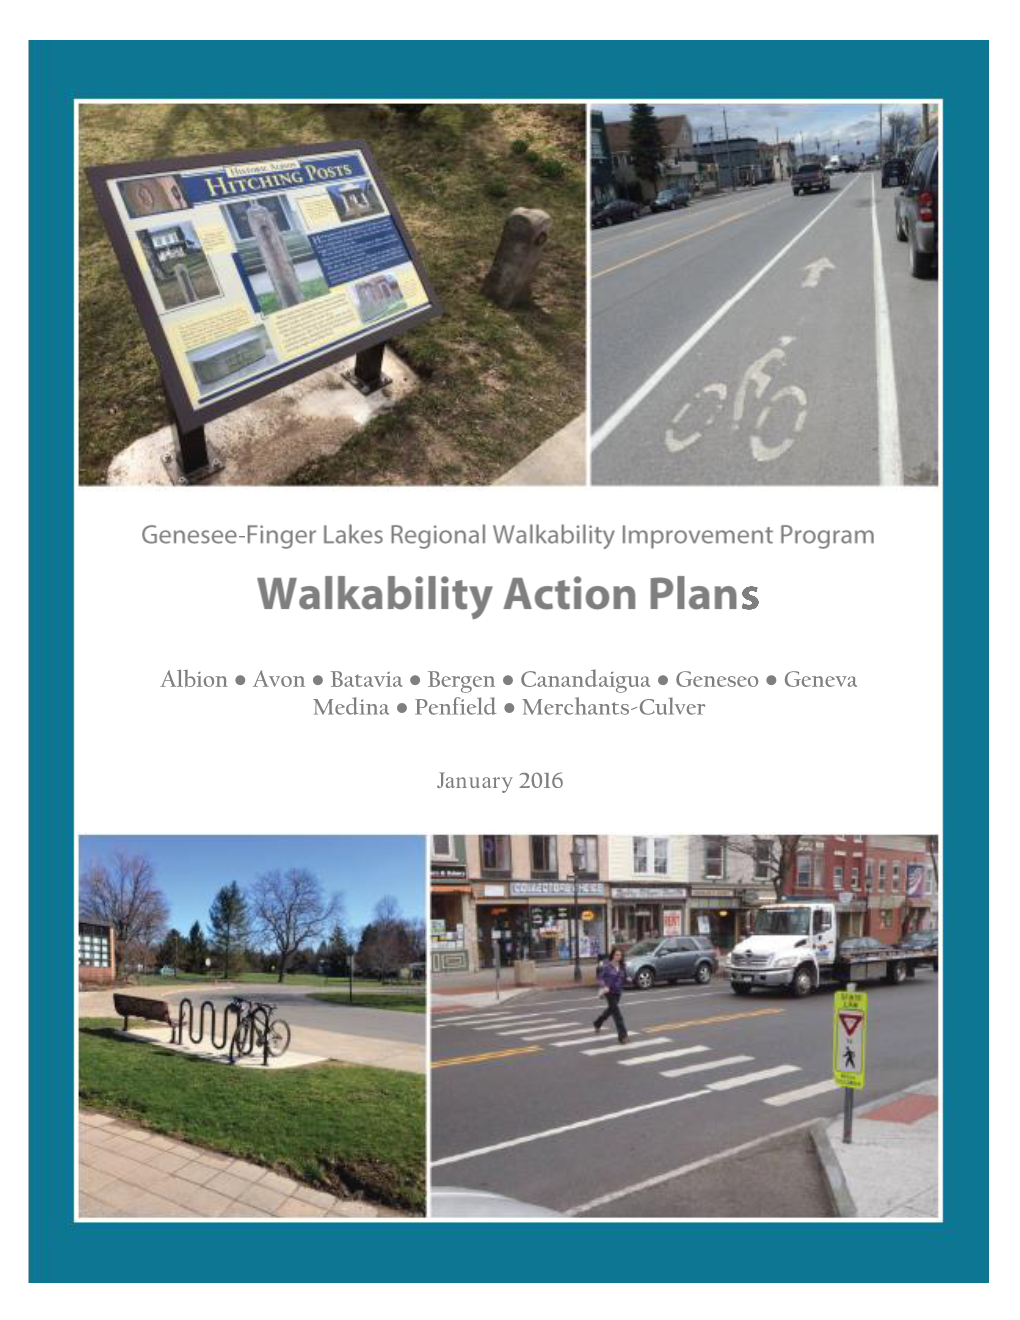 Regional Walkability Improvement Program